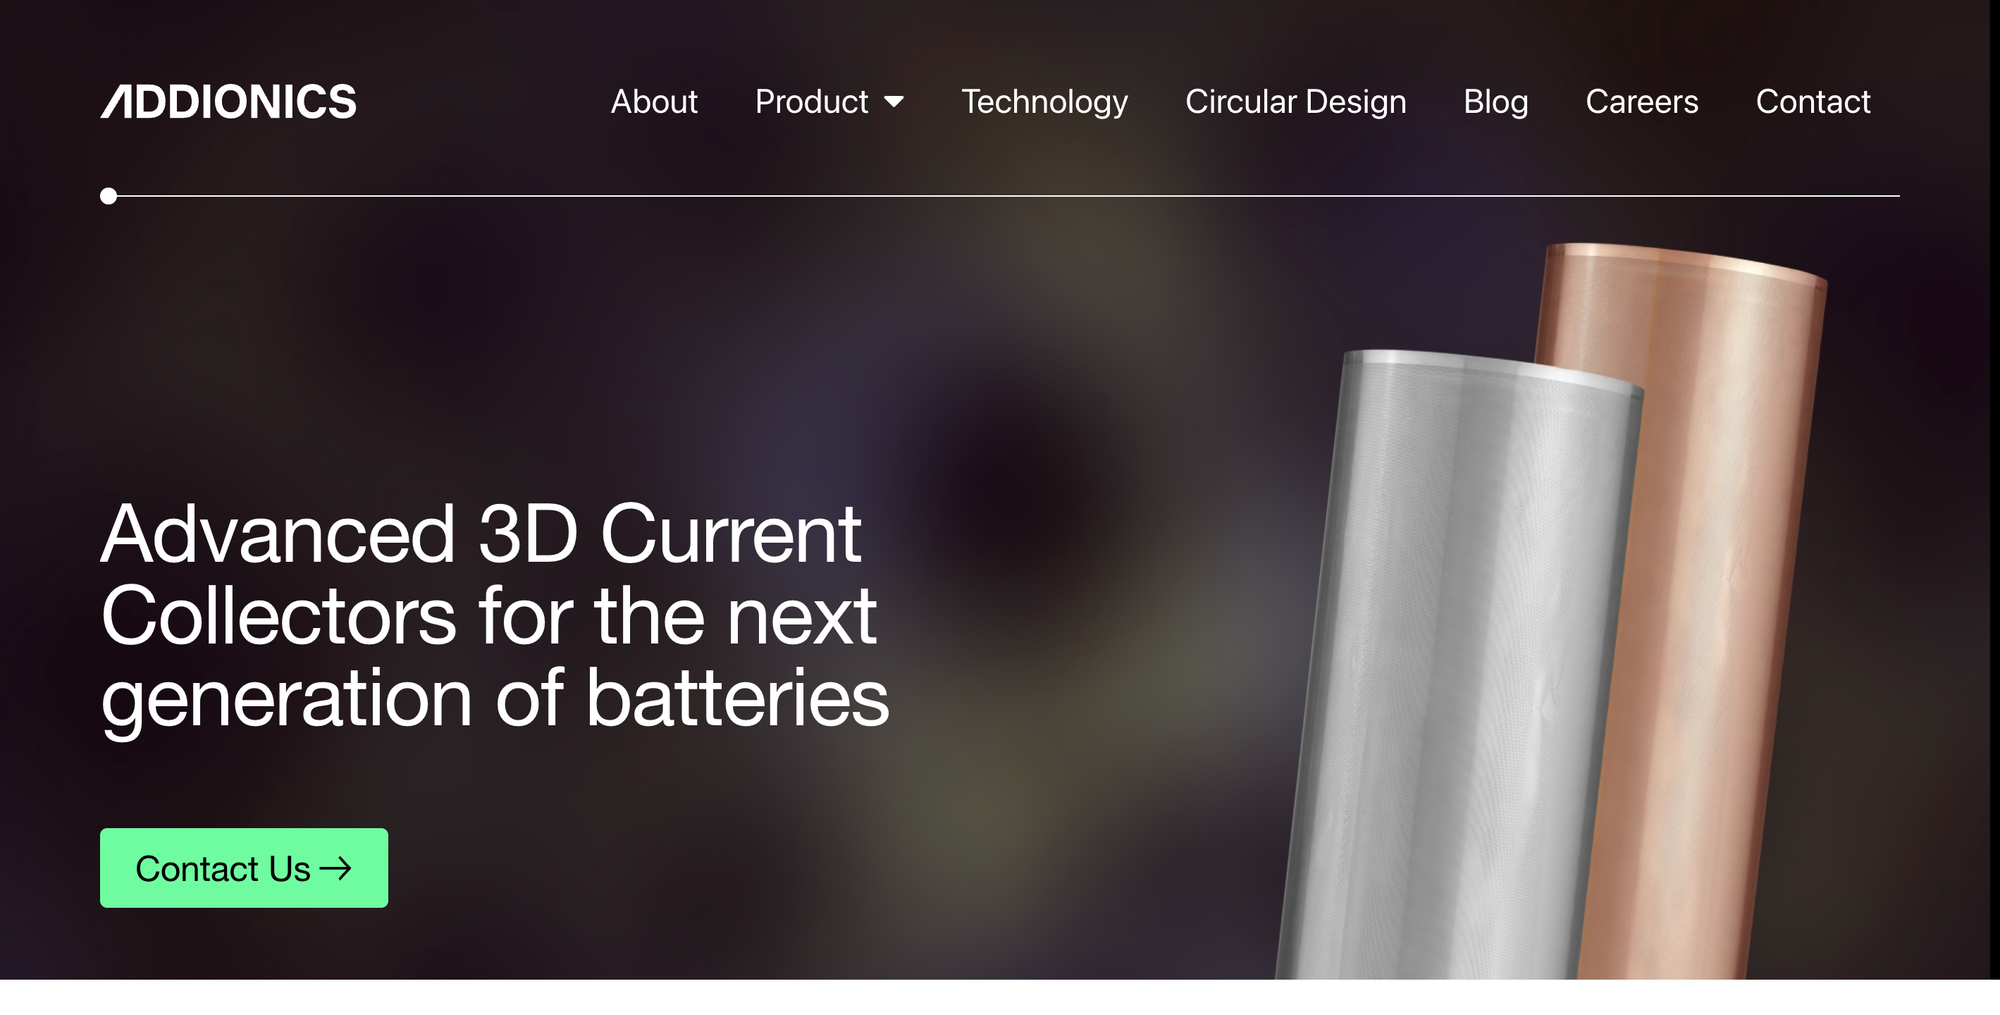 Addionics Raises $39 Million Series B to Innovate Cost-Efficient EV Battery Technology